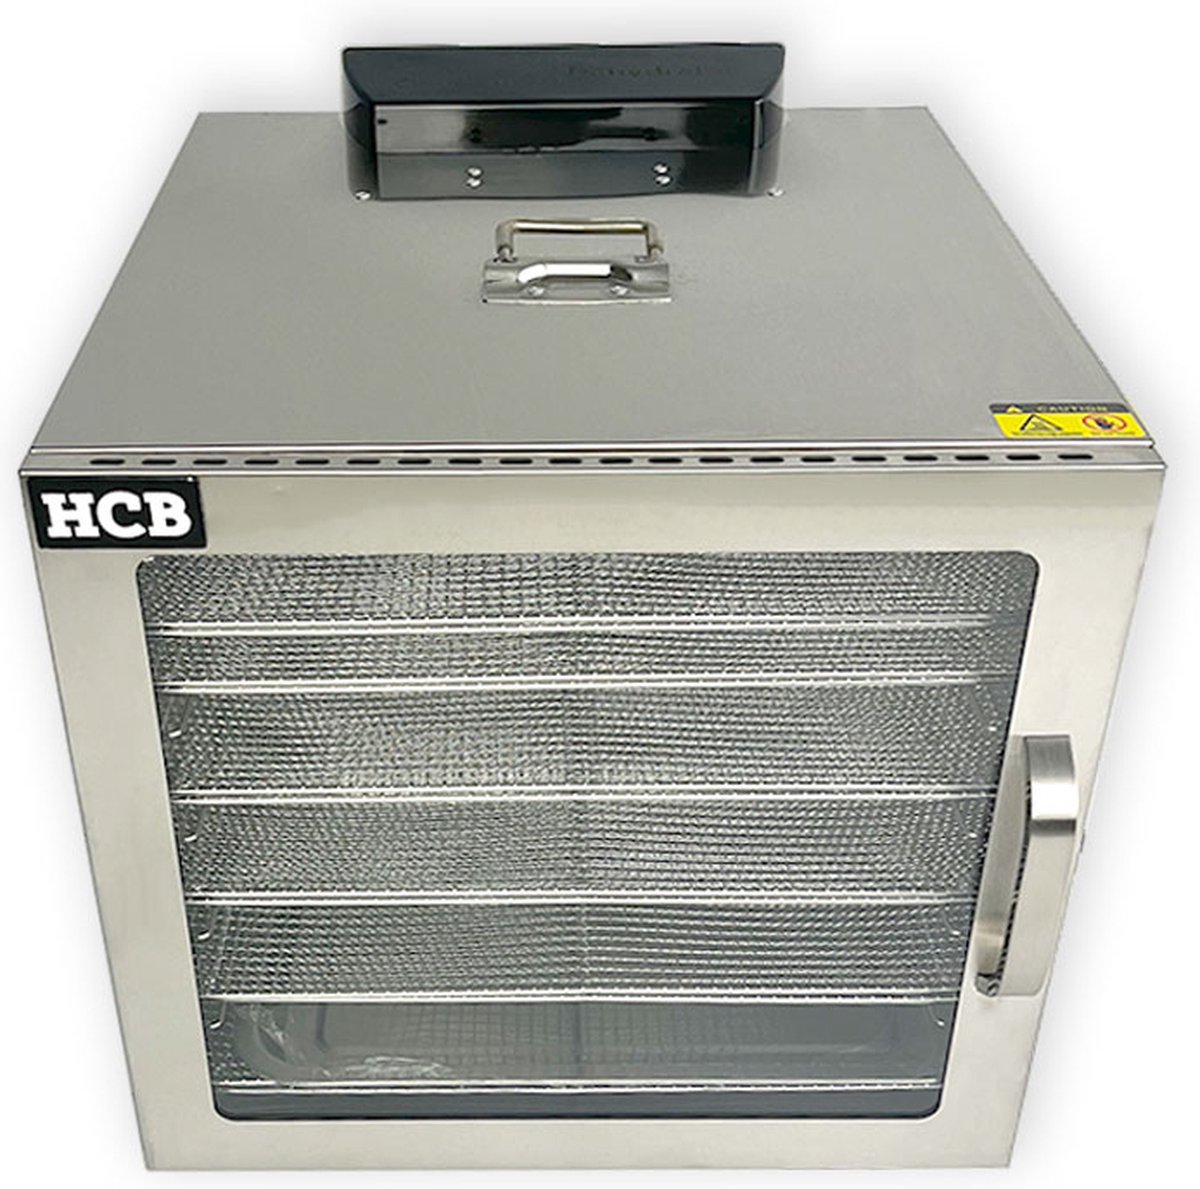 HCB® - Professionele Horeca Voedseldroger - 6 rekken - 230V - RVS droogoven - dehydrator - 46.5x40.5x40.5 cm (BxDxH) - HCB